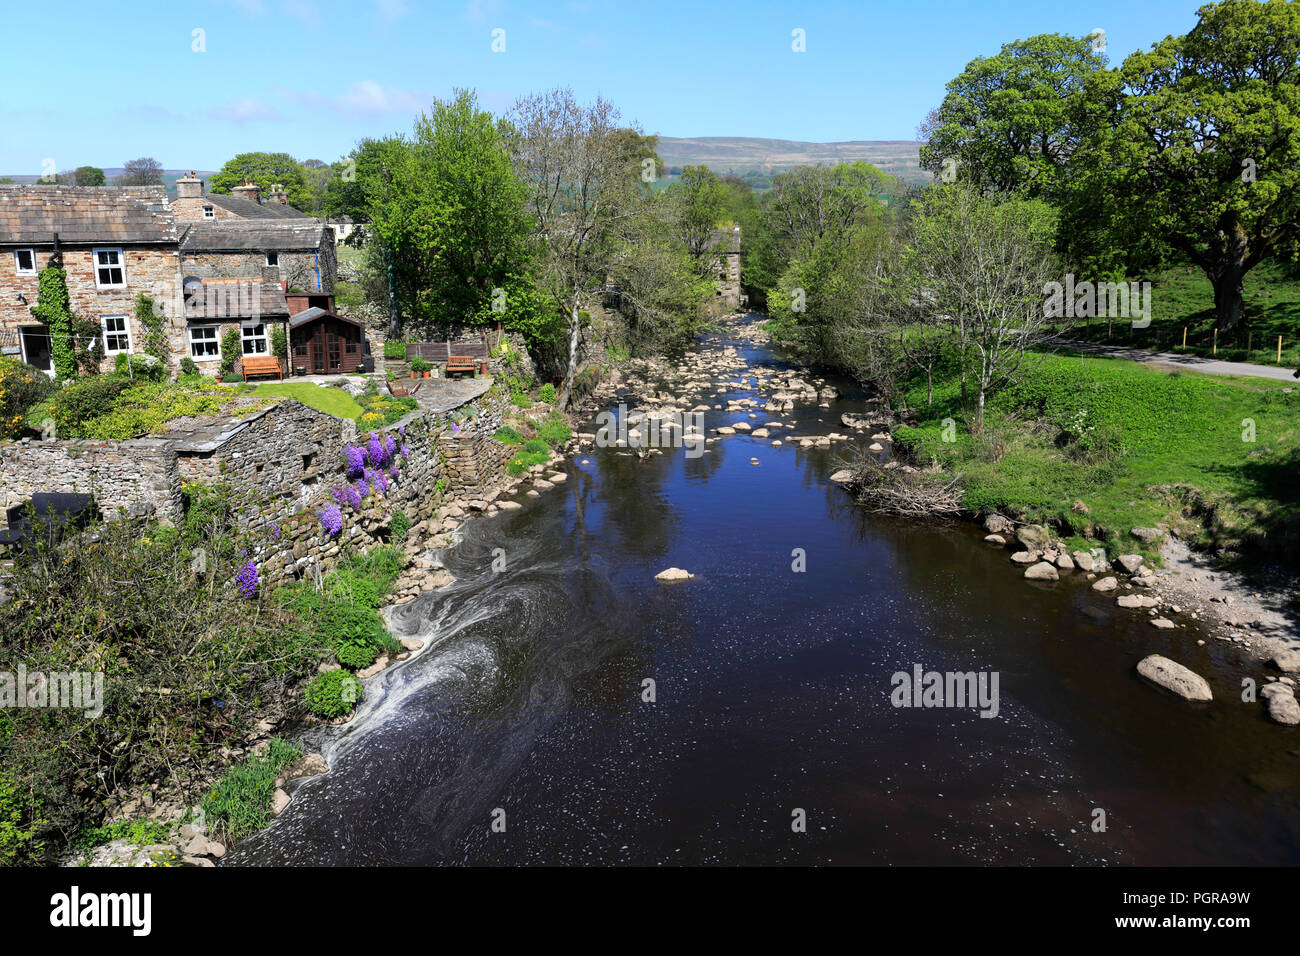 The river Ure, Bainbridge village, Richmondshire, North Yorkshire, England, UK Stock Photo